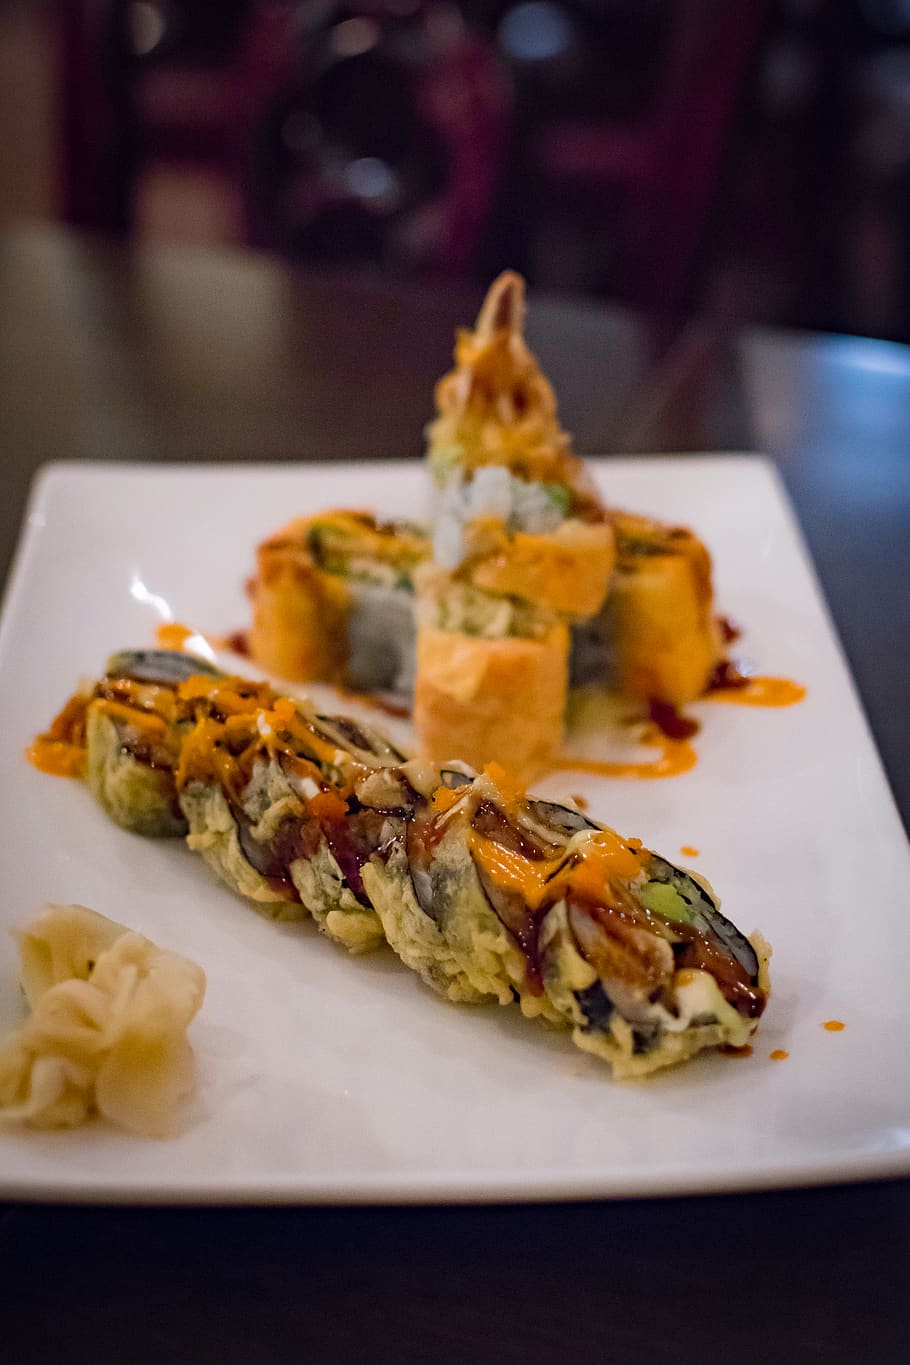 HD wallpaper: sushi, lunch, dinner, city, fresh, beautiful, aesthetically pleasing